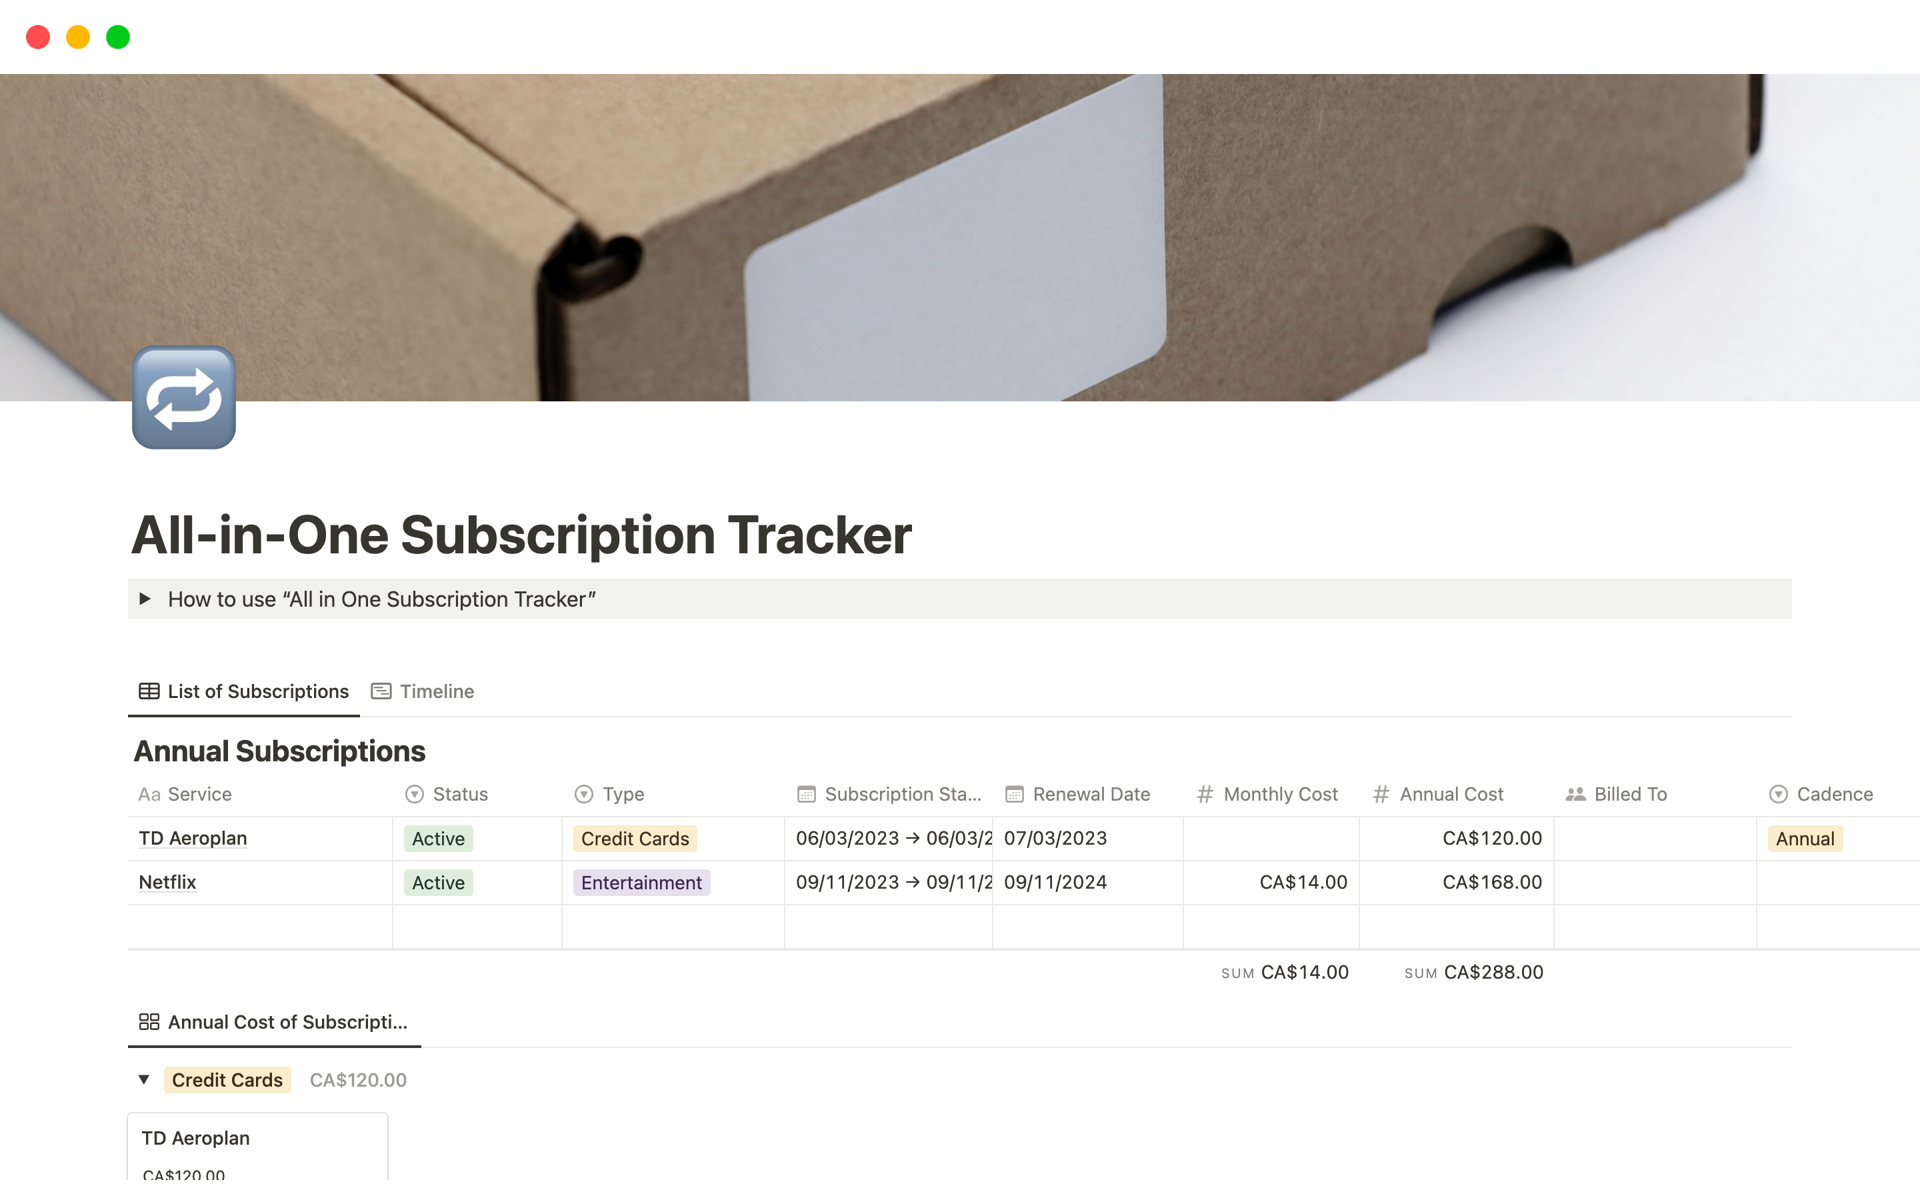 Vista previa de plantilla para All-in-One Subscription Tracker